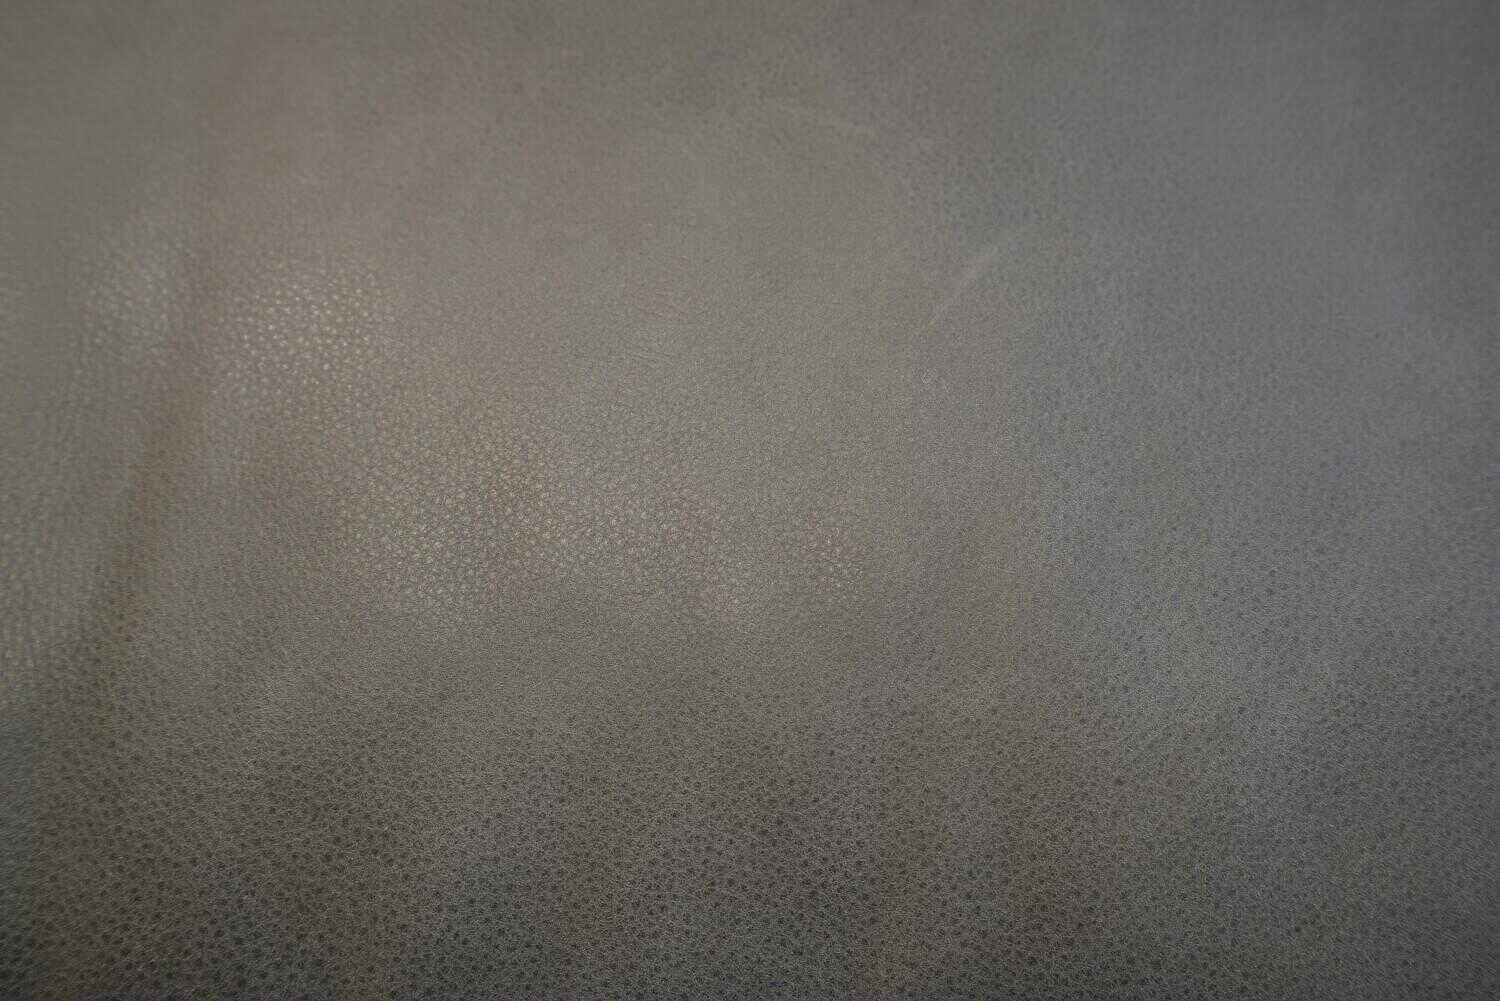 Sofa WK 668 Sienna Leder Grau Armteil Klappbar